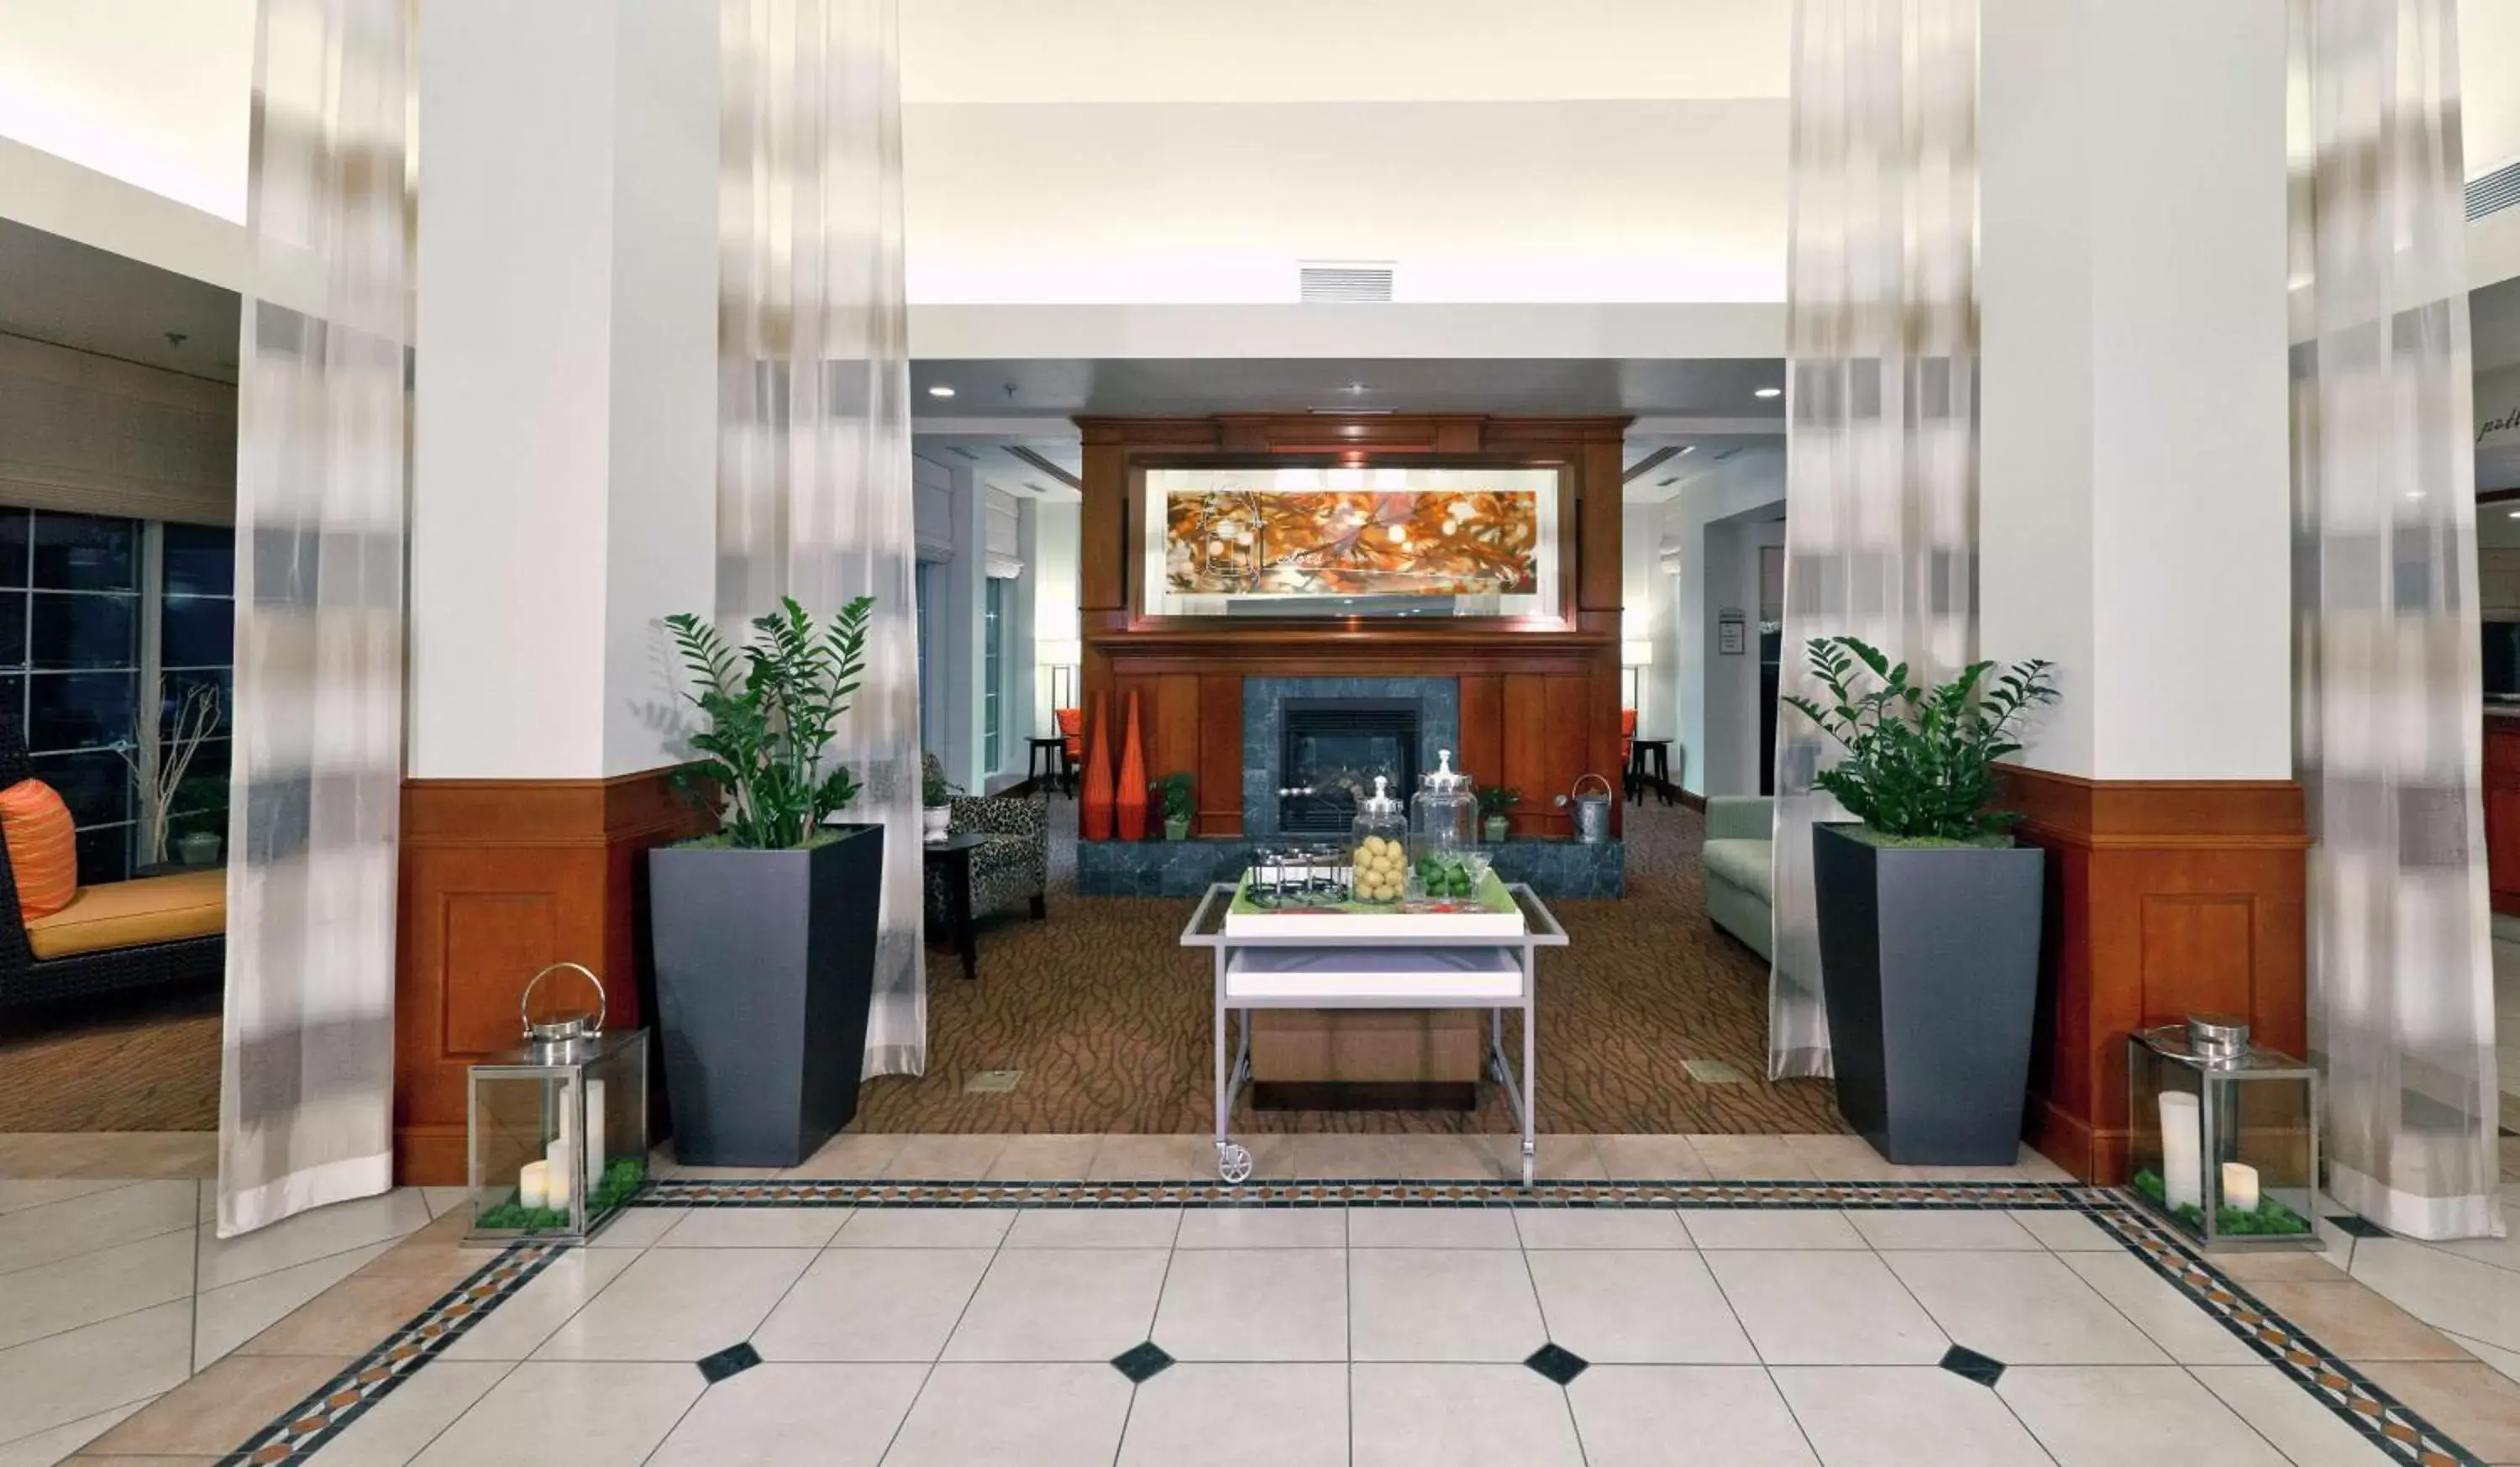 Lobby or reception, Lobby/Reception in Hilton Garden Inn Ontario Rancho Cucamonga